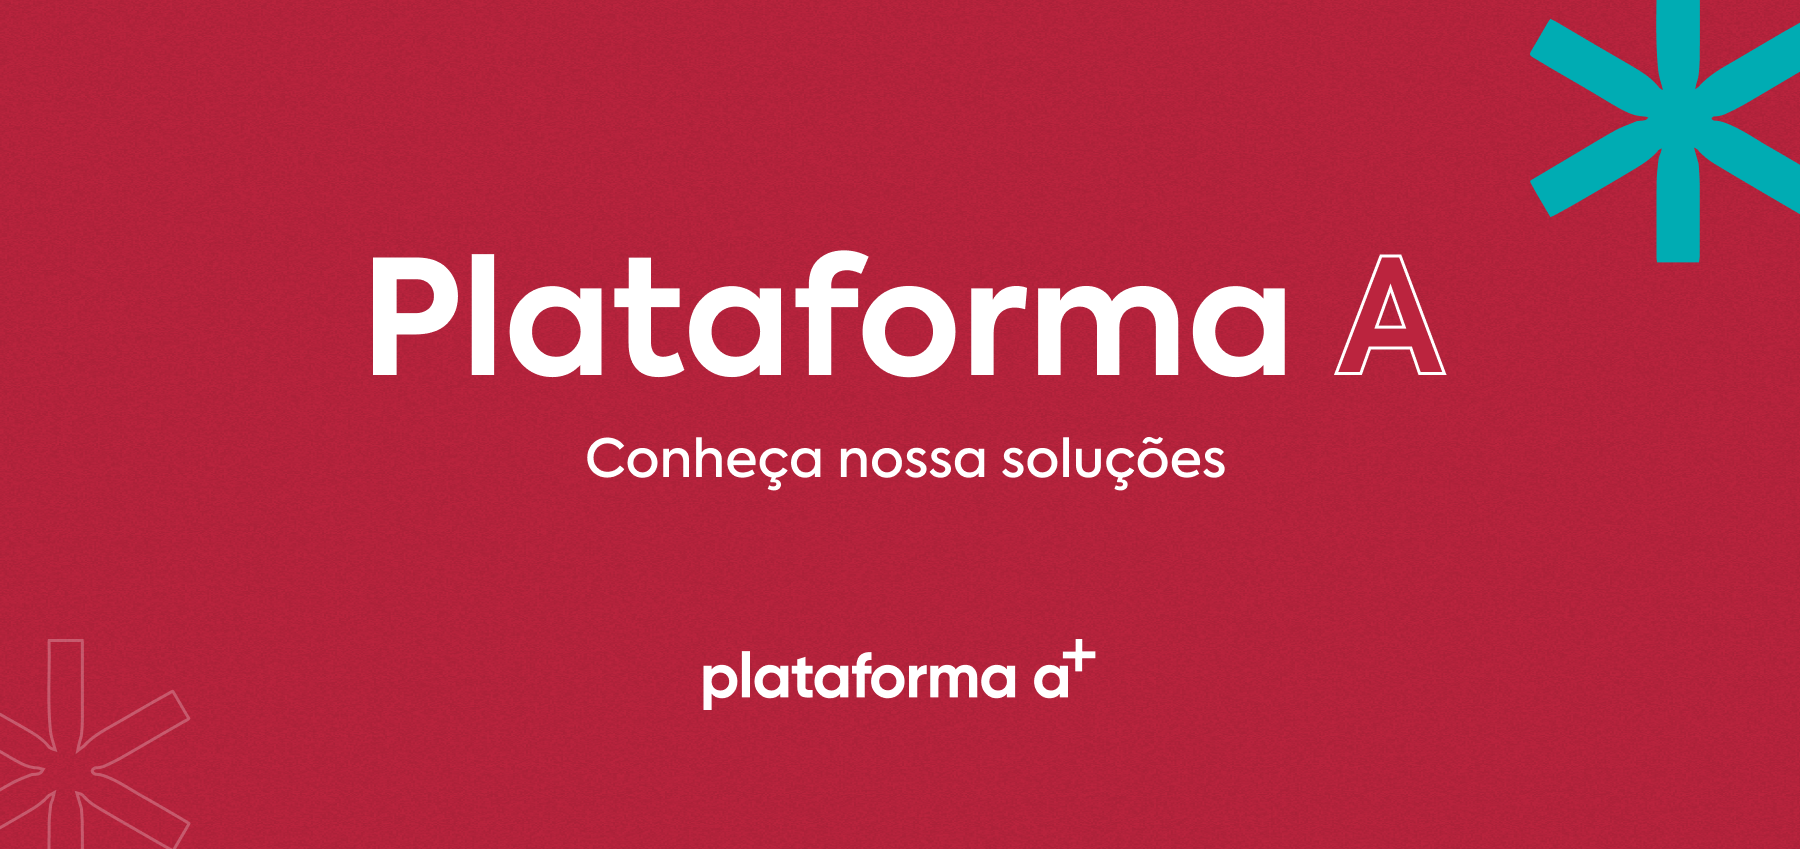 (c) Plataformaa.com.br